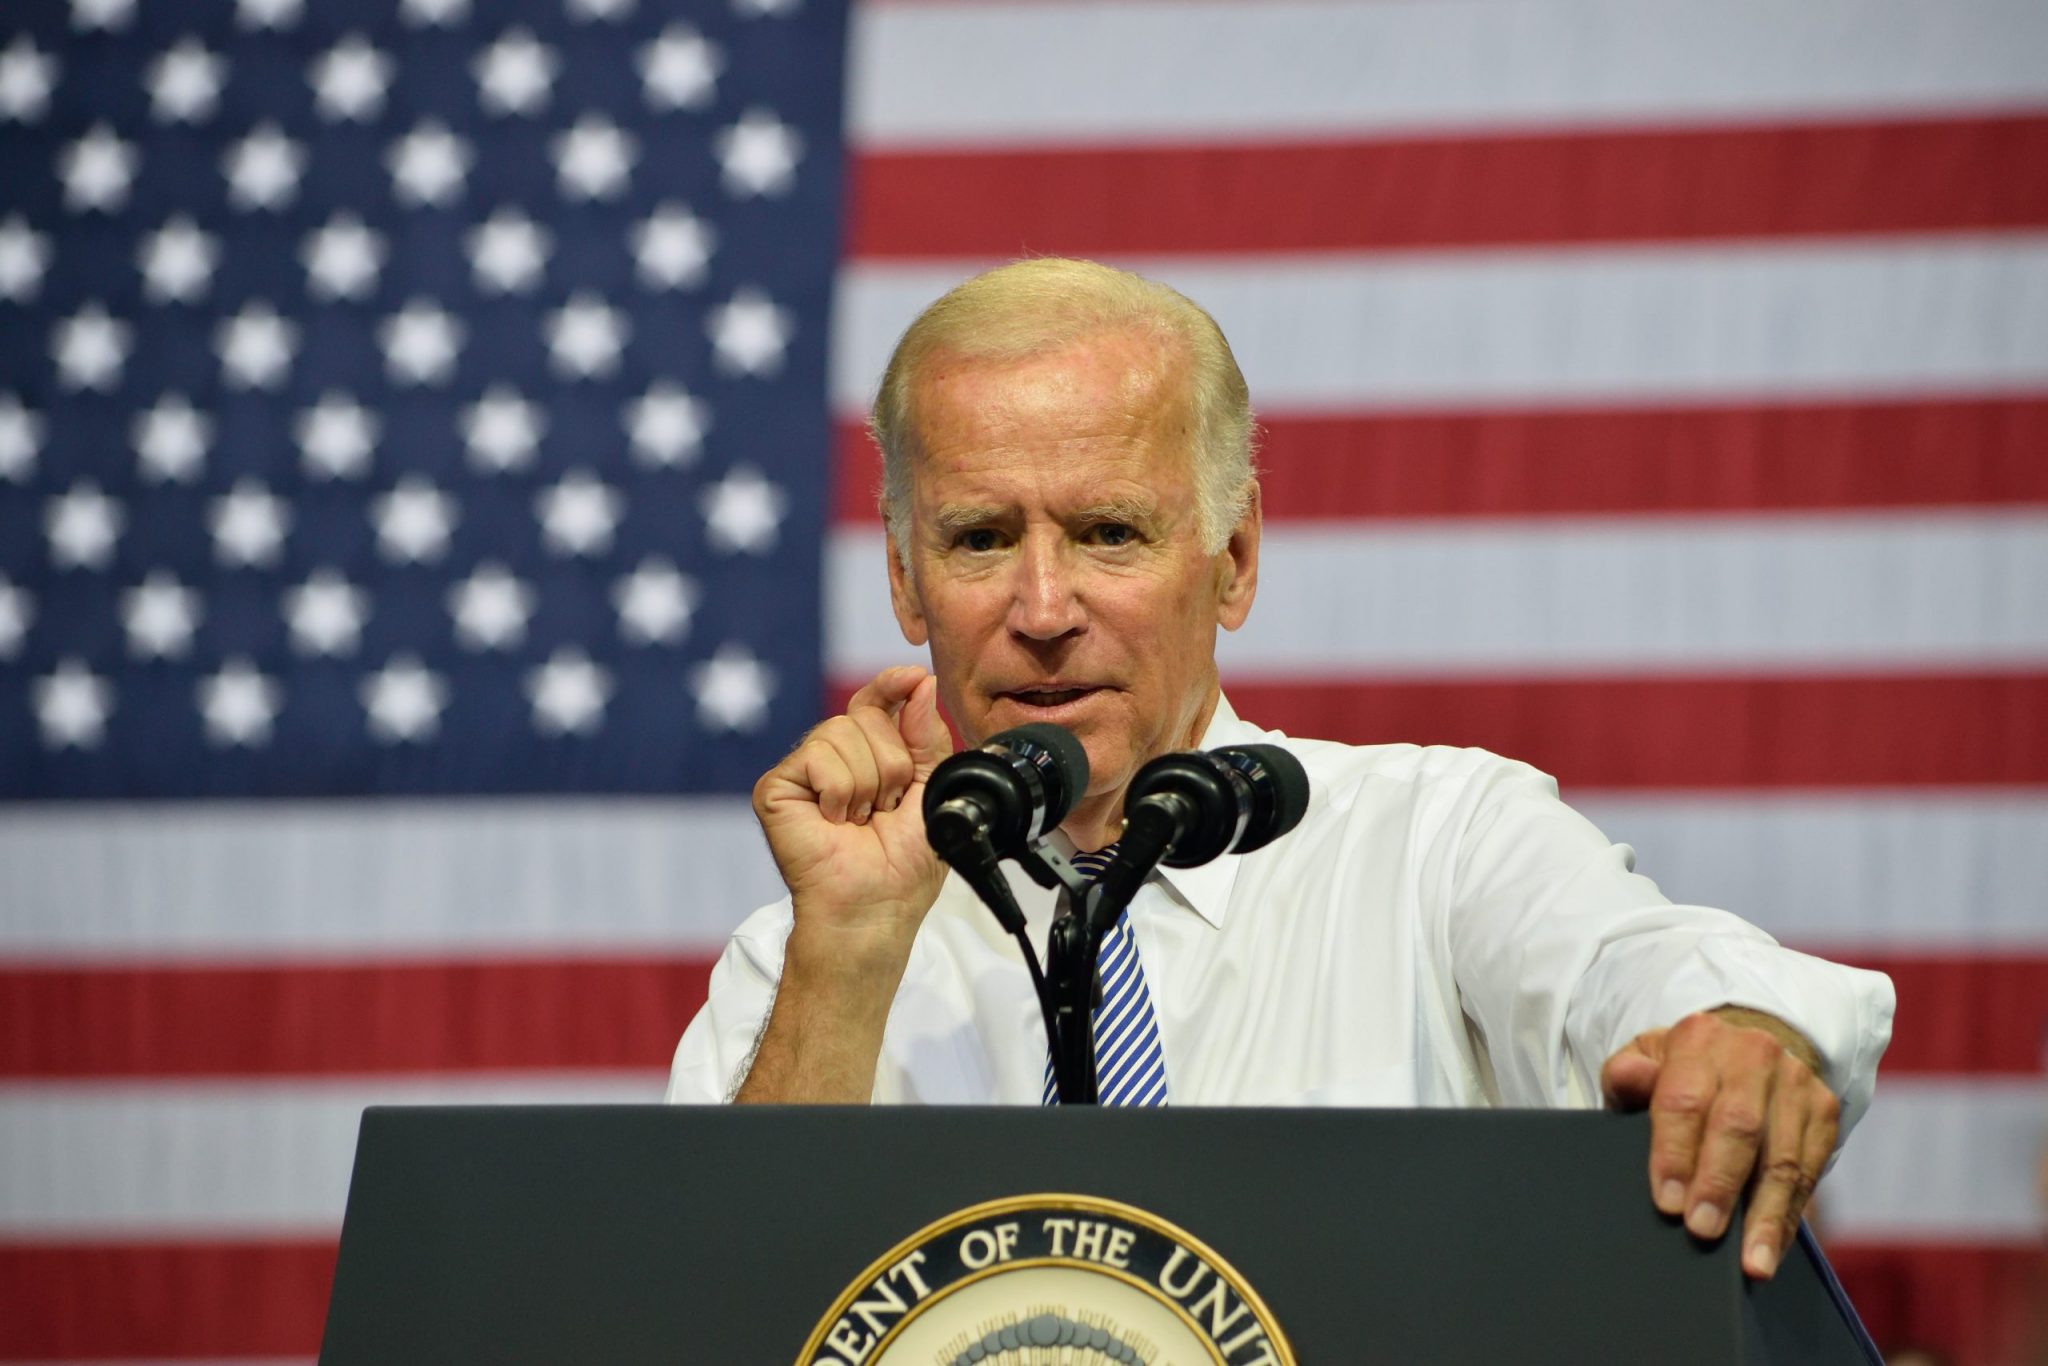 Joe Biden delivers a speech in front of an American flag